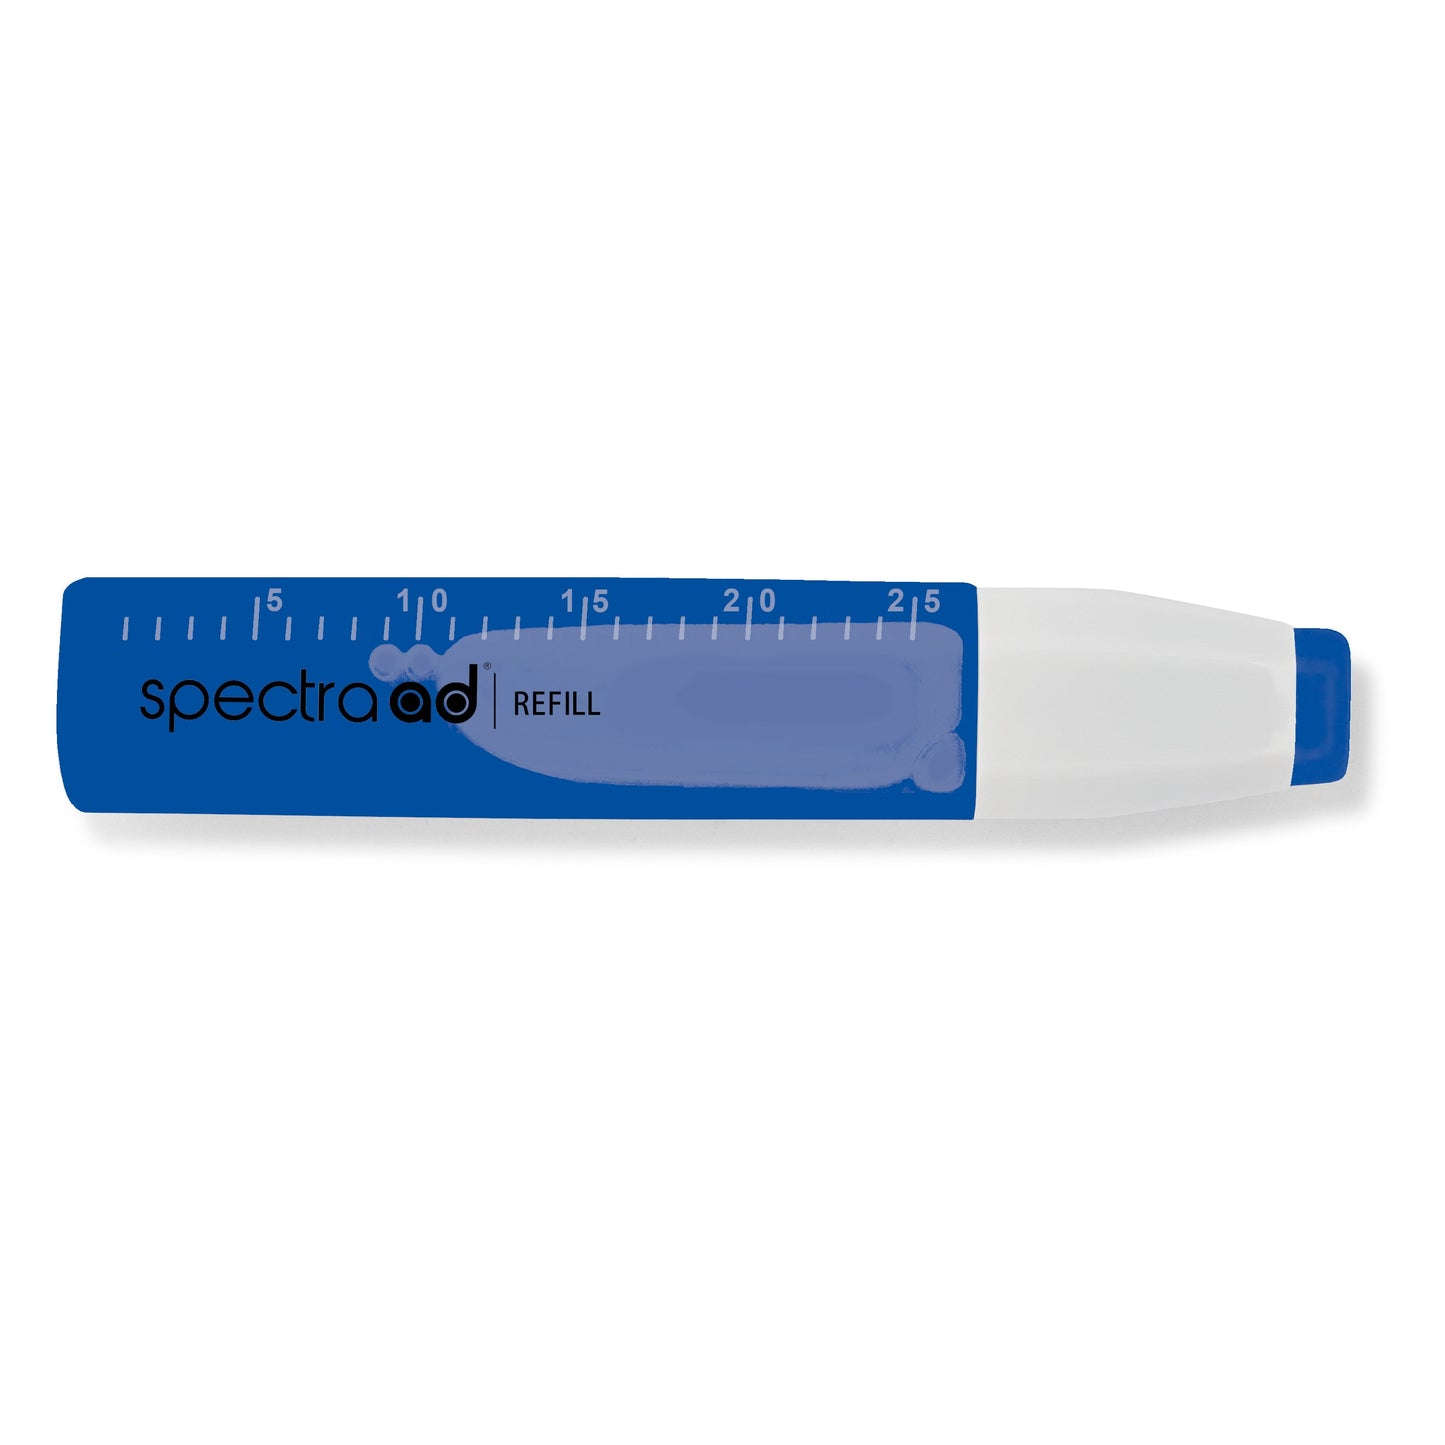 038 - Ultramarine - Spectra AD Refill Bottle